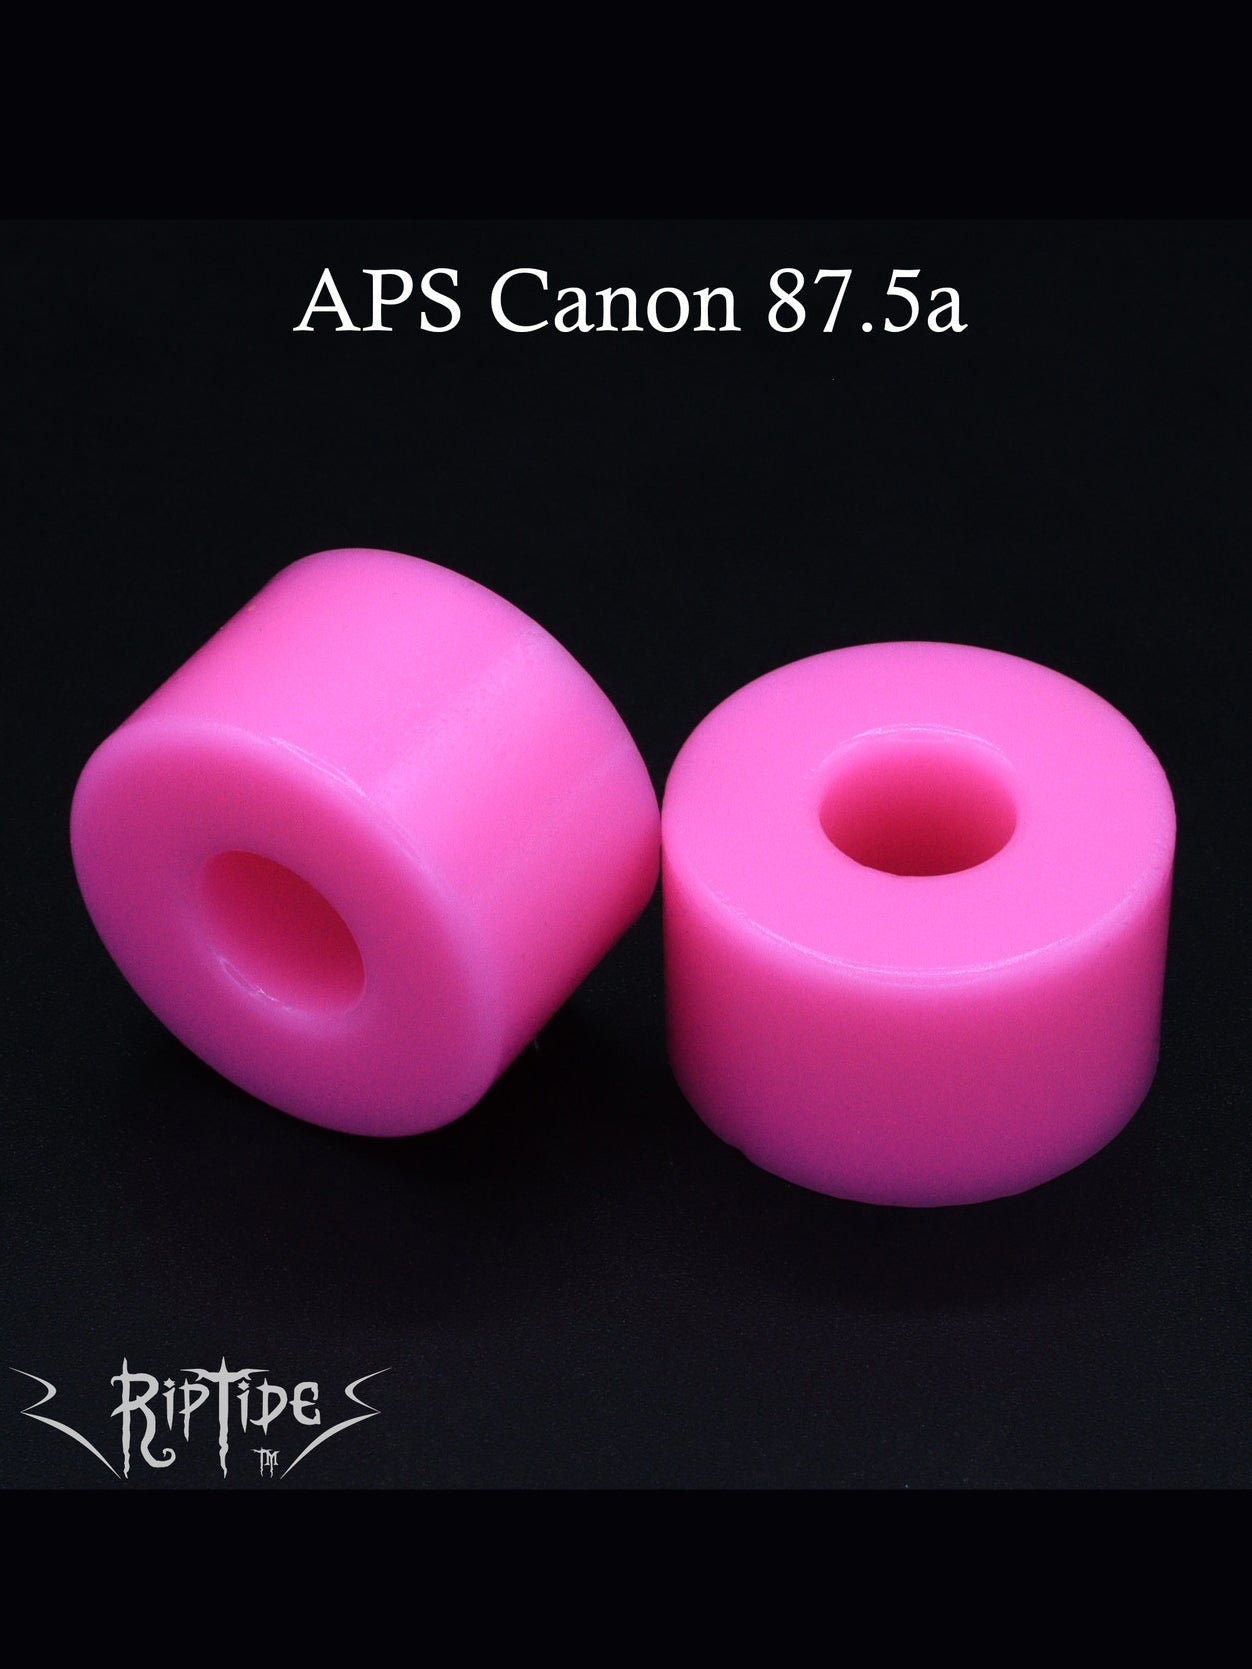 RIP TIDE APS Canon Bushings 87.5a - Pink